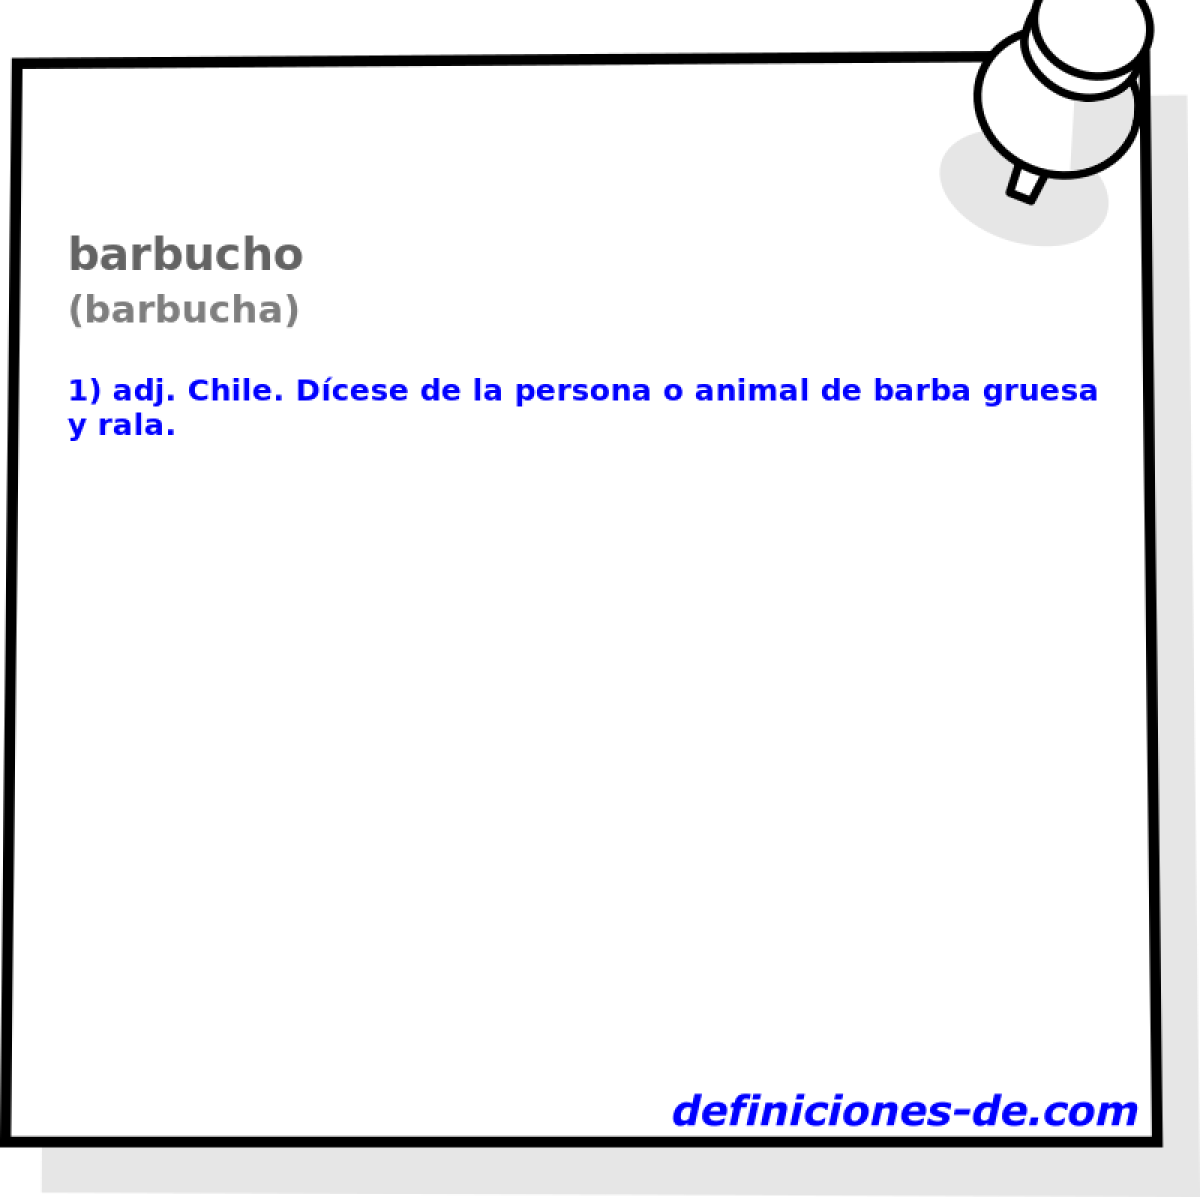 barbucho (barbucha)